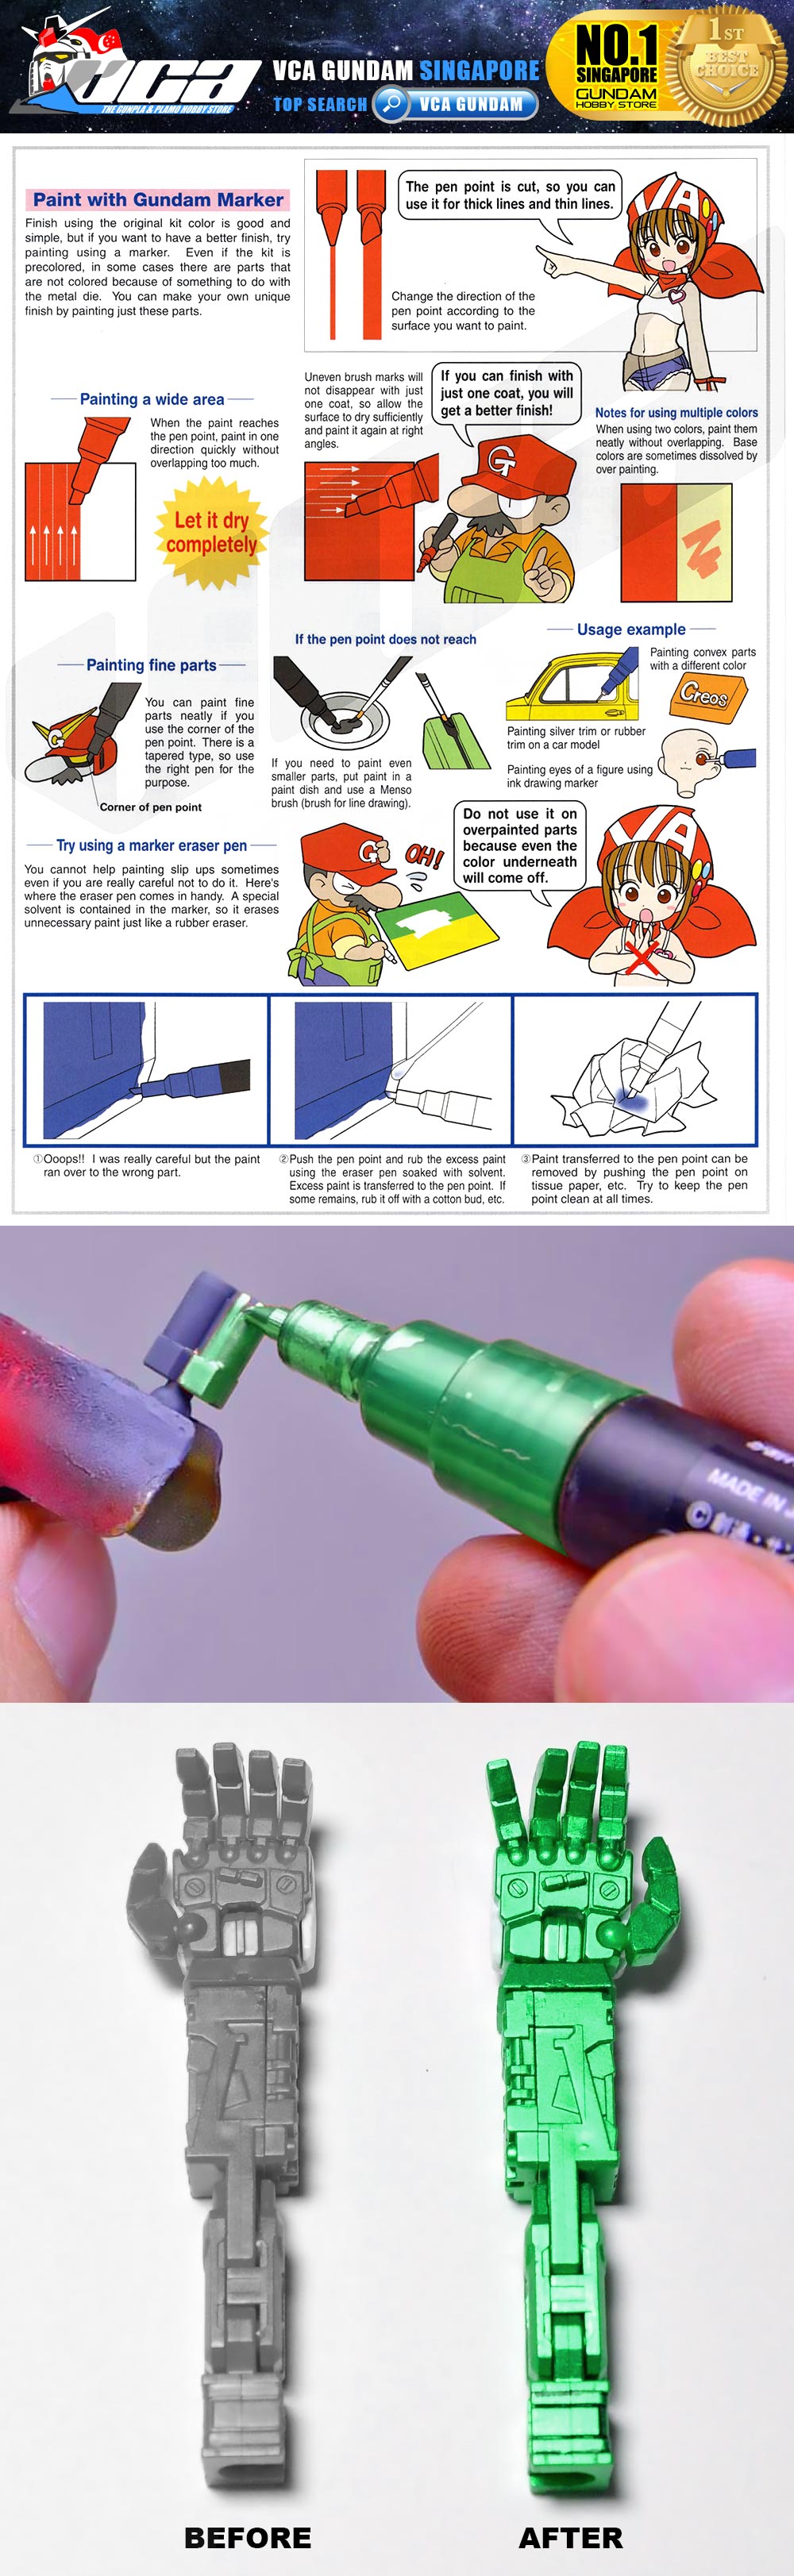 GSI CREOS MR GREY HOBBY GM18 Gundam Marker Painting Pen Green Metallic